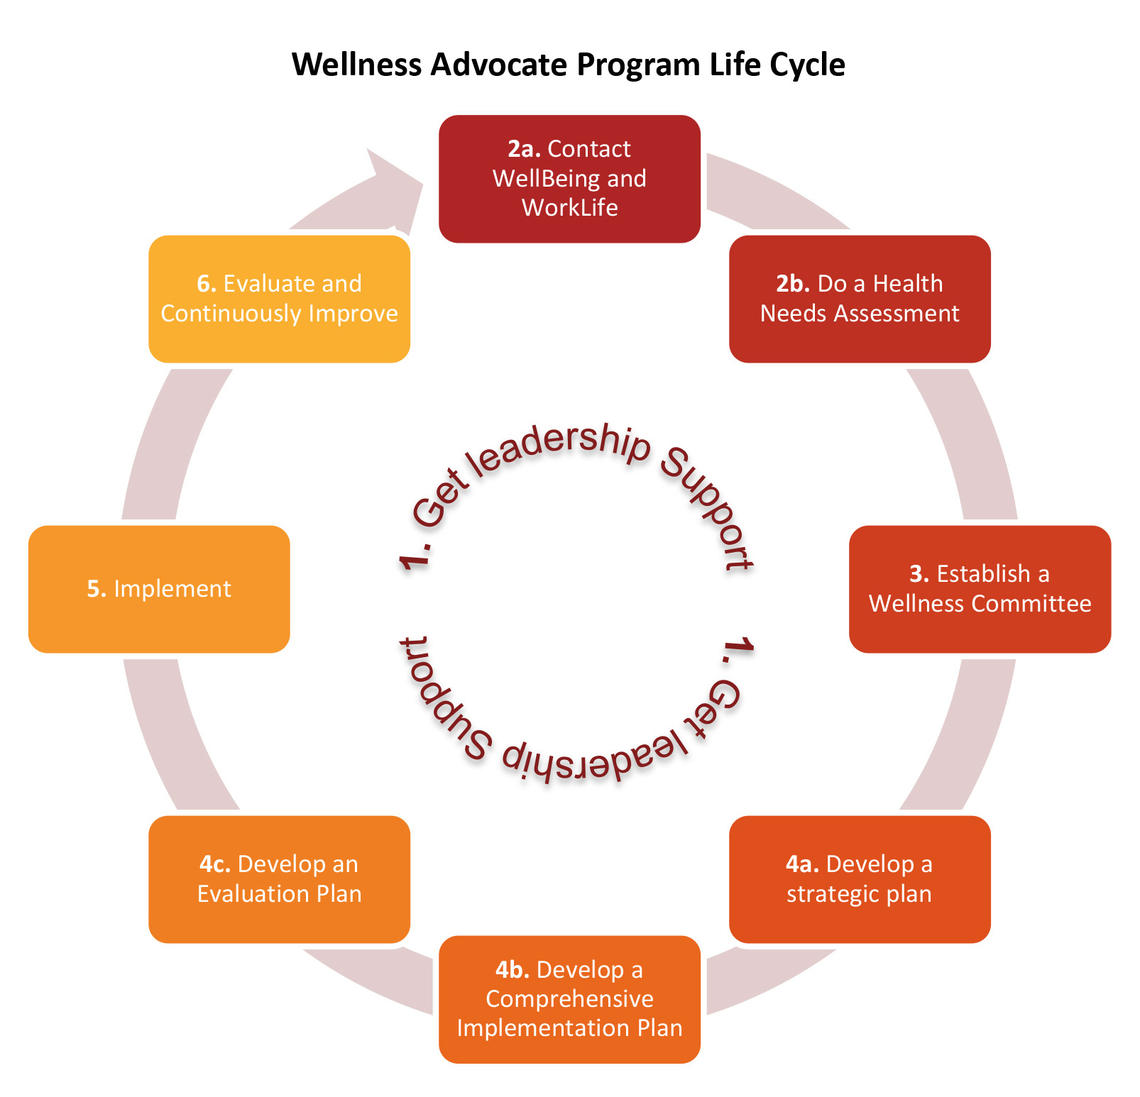 Wellness Advocate Program Life Cycle